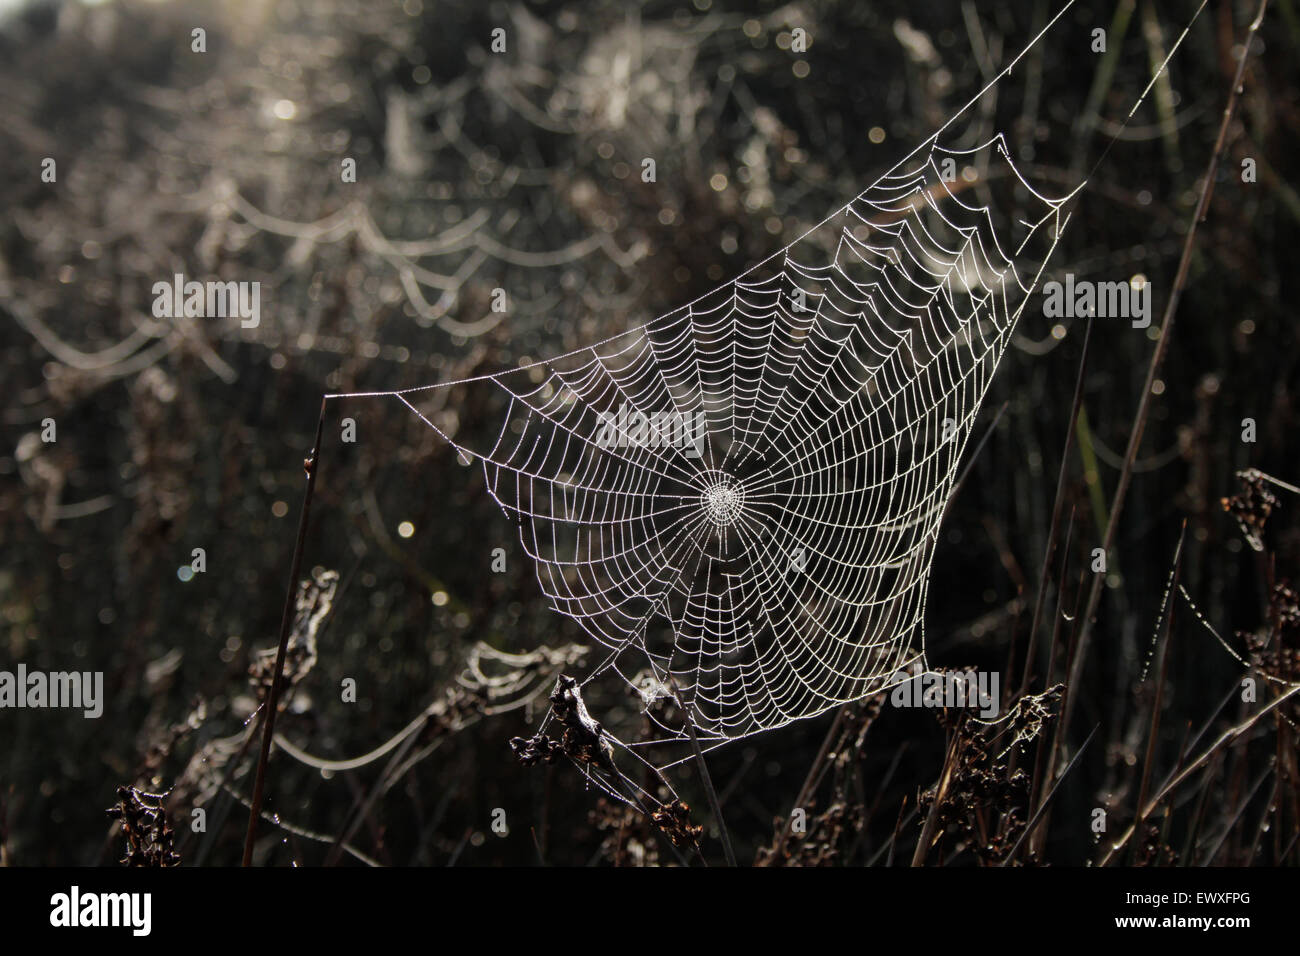 Backlit spiderweb in the morning dew. Diapori shipyard, Kondias village bay. Limnos, Greece. Stock Photo